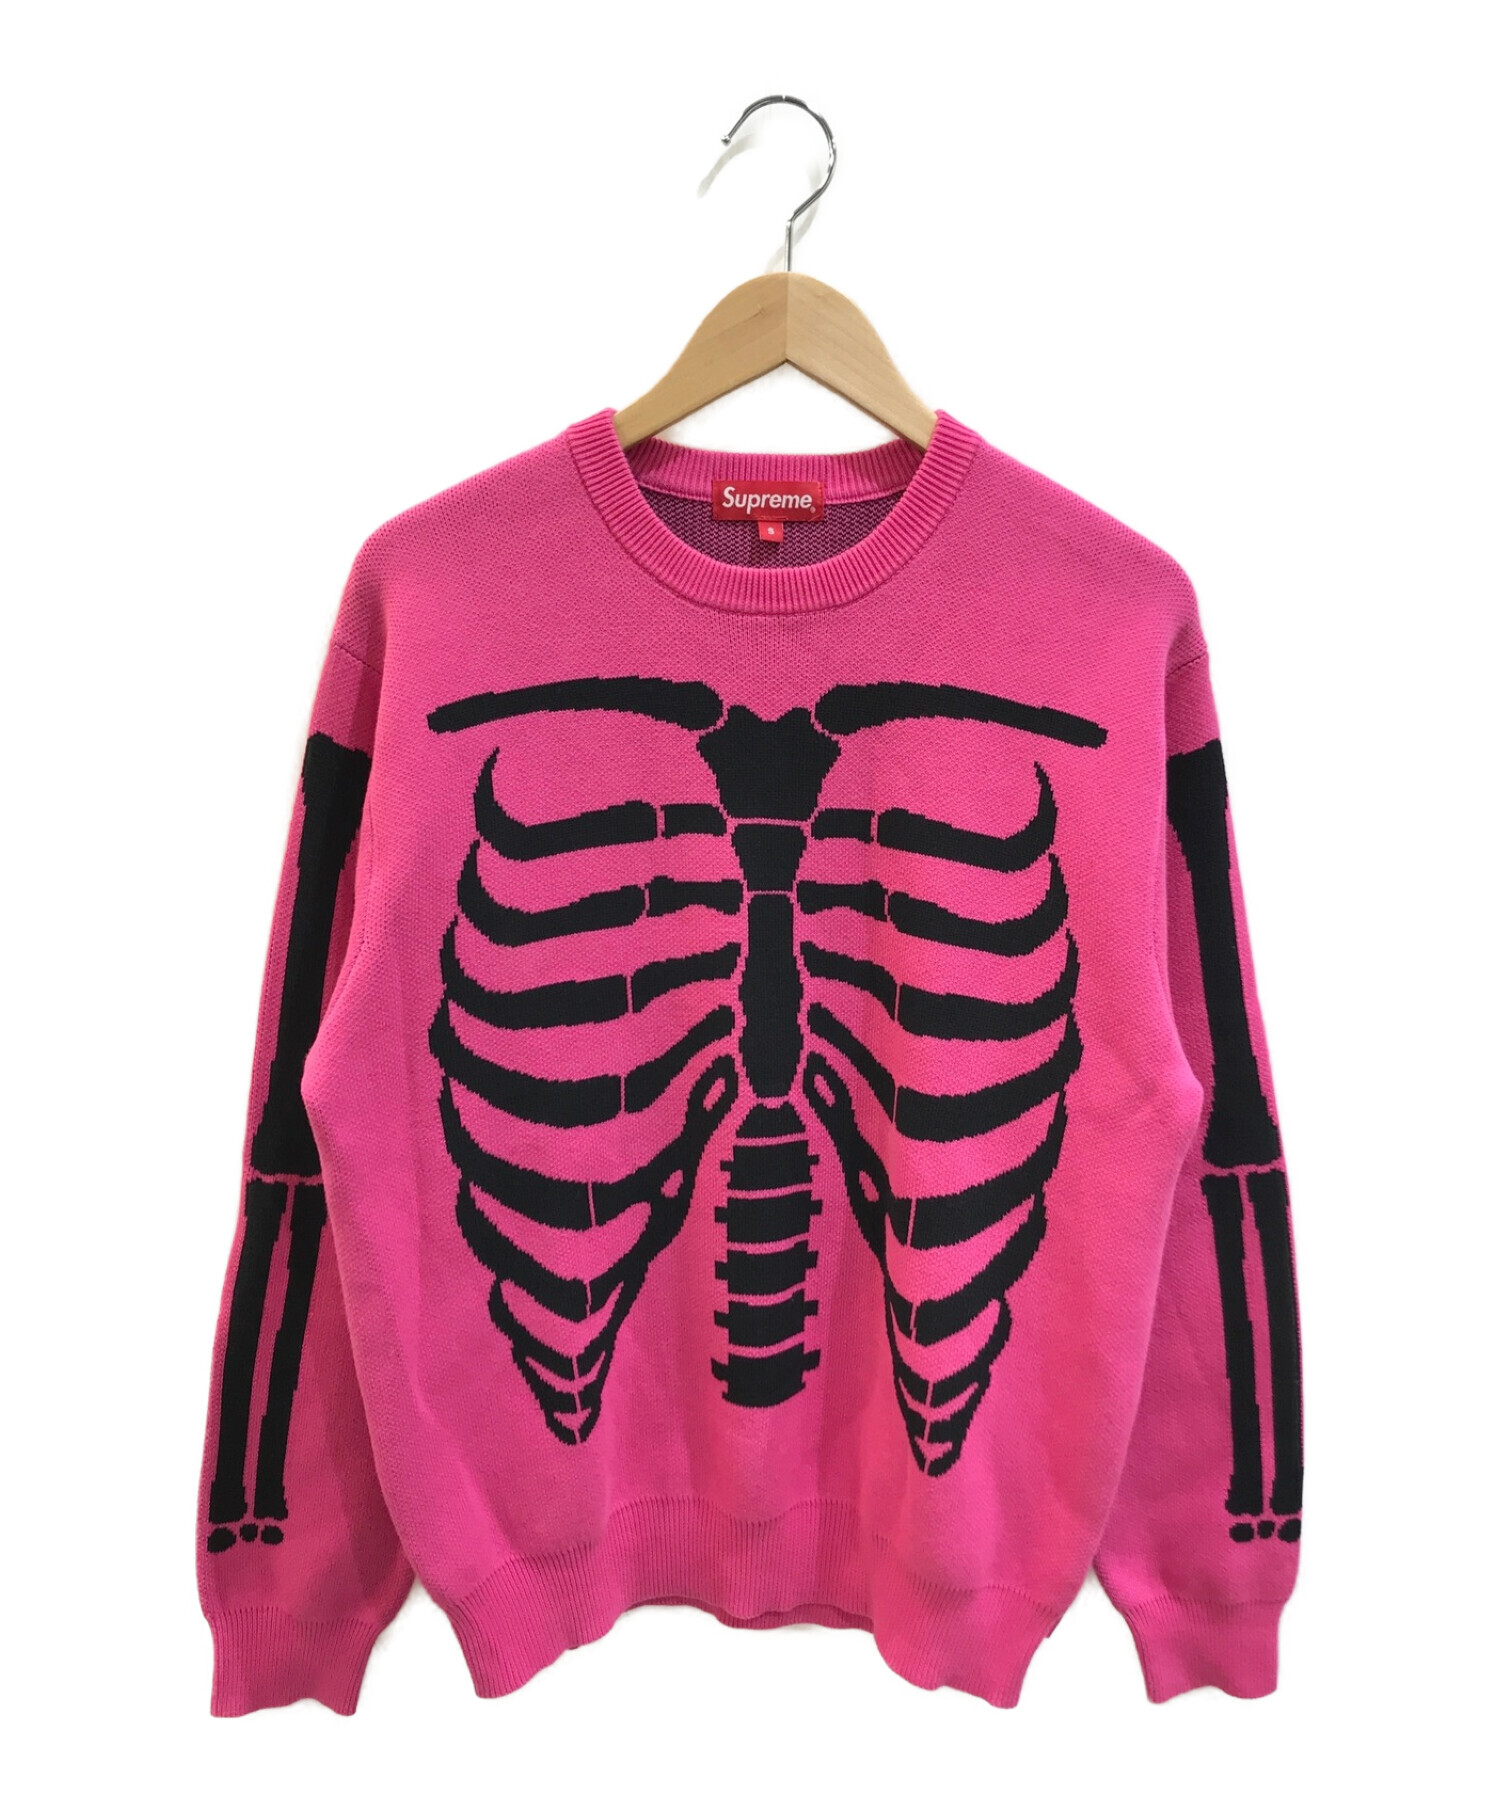 Supreme Bones Sweater シュプリーム ボーンズ セーター